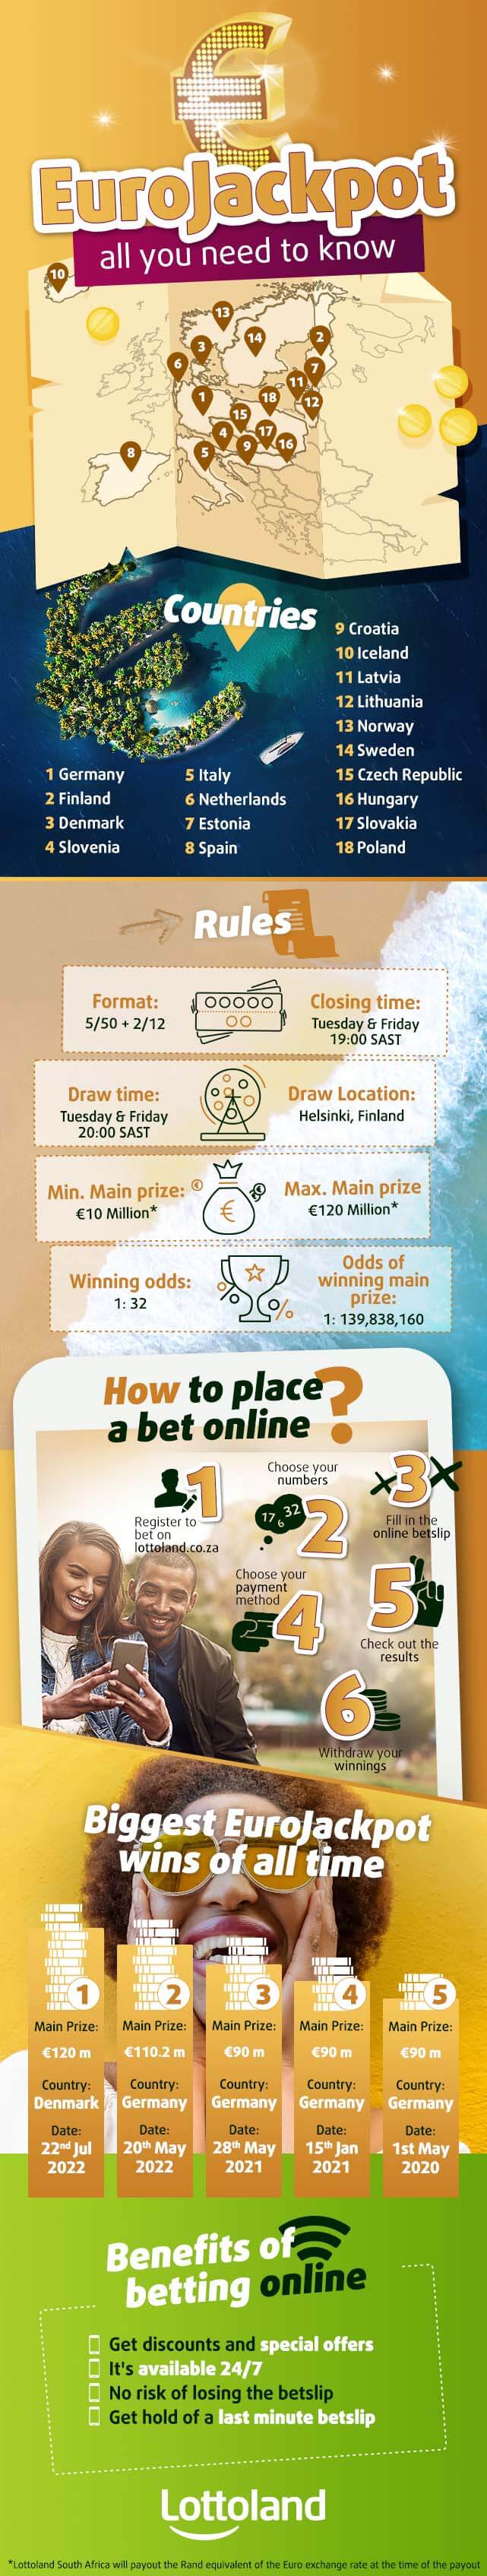 How to Bet on EuroJackpot 